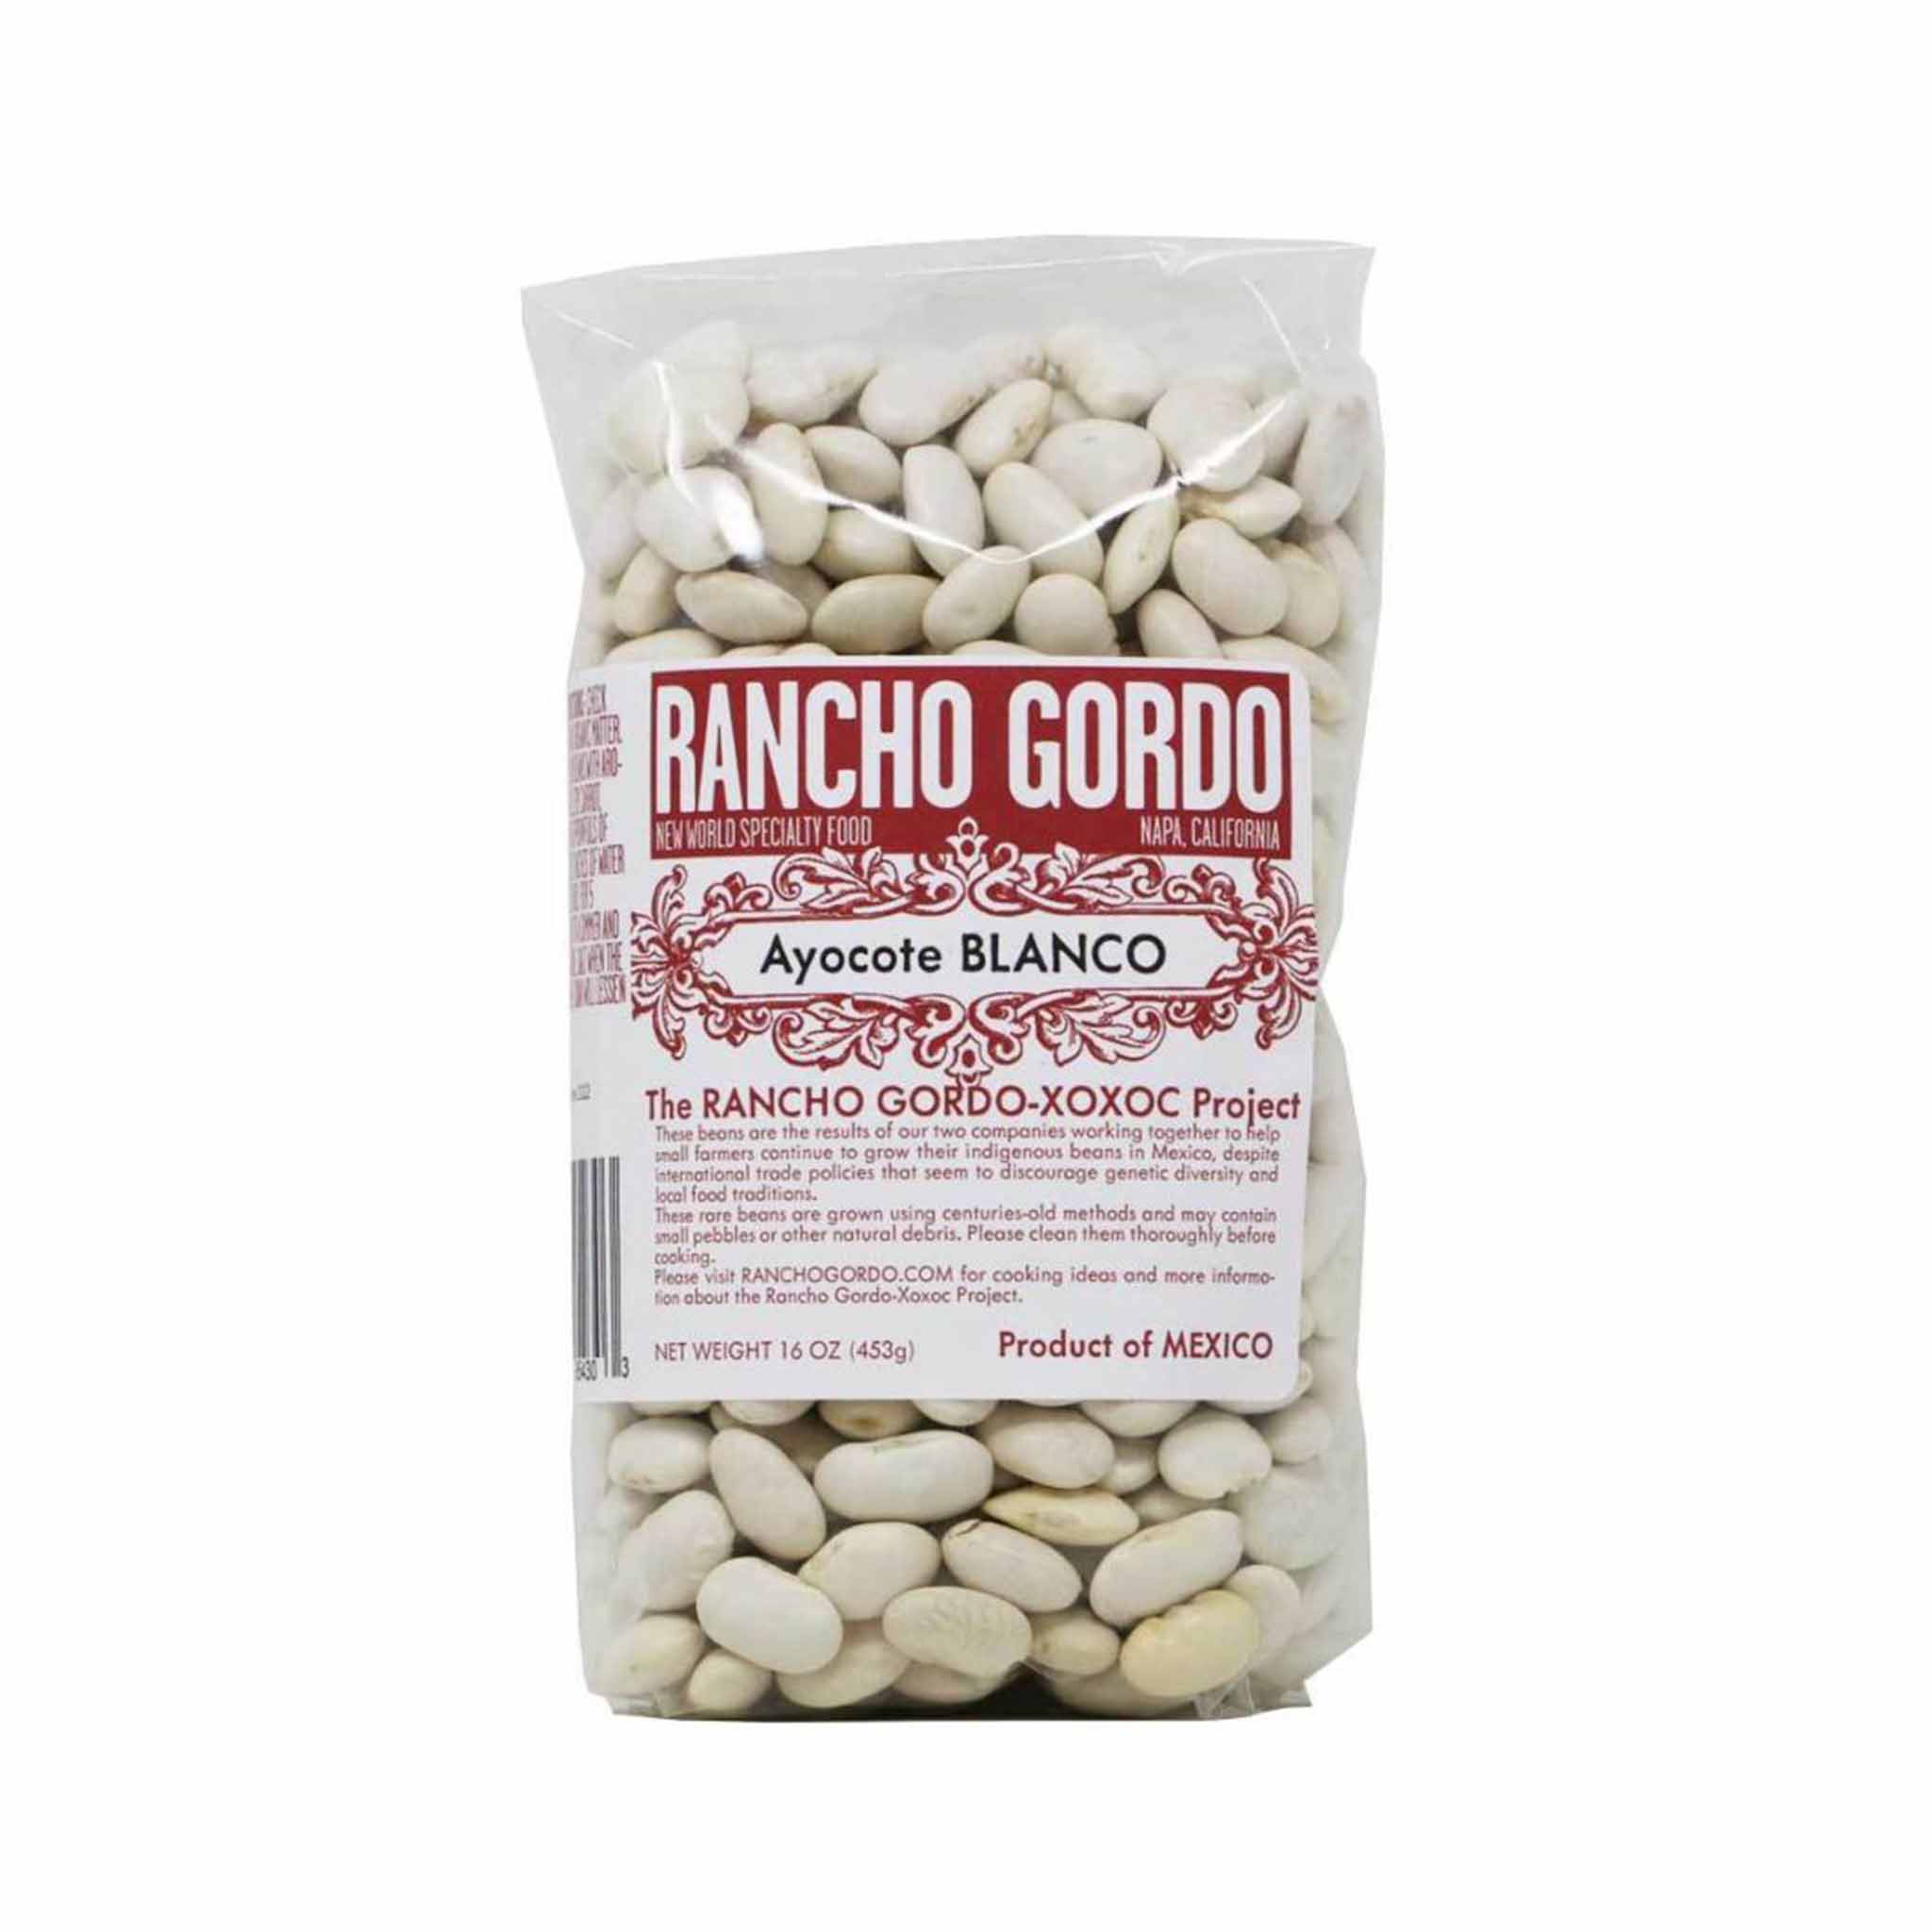 Rancho Gordo Ayocote Blanco Bean